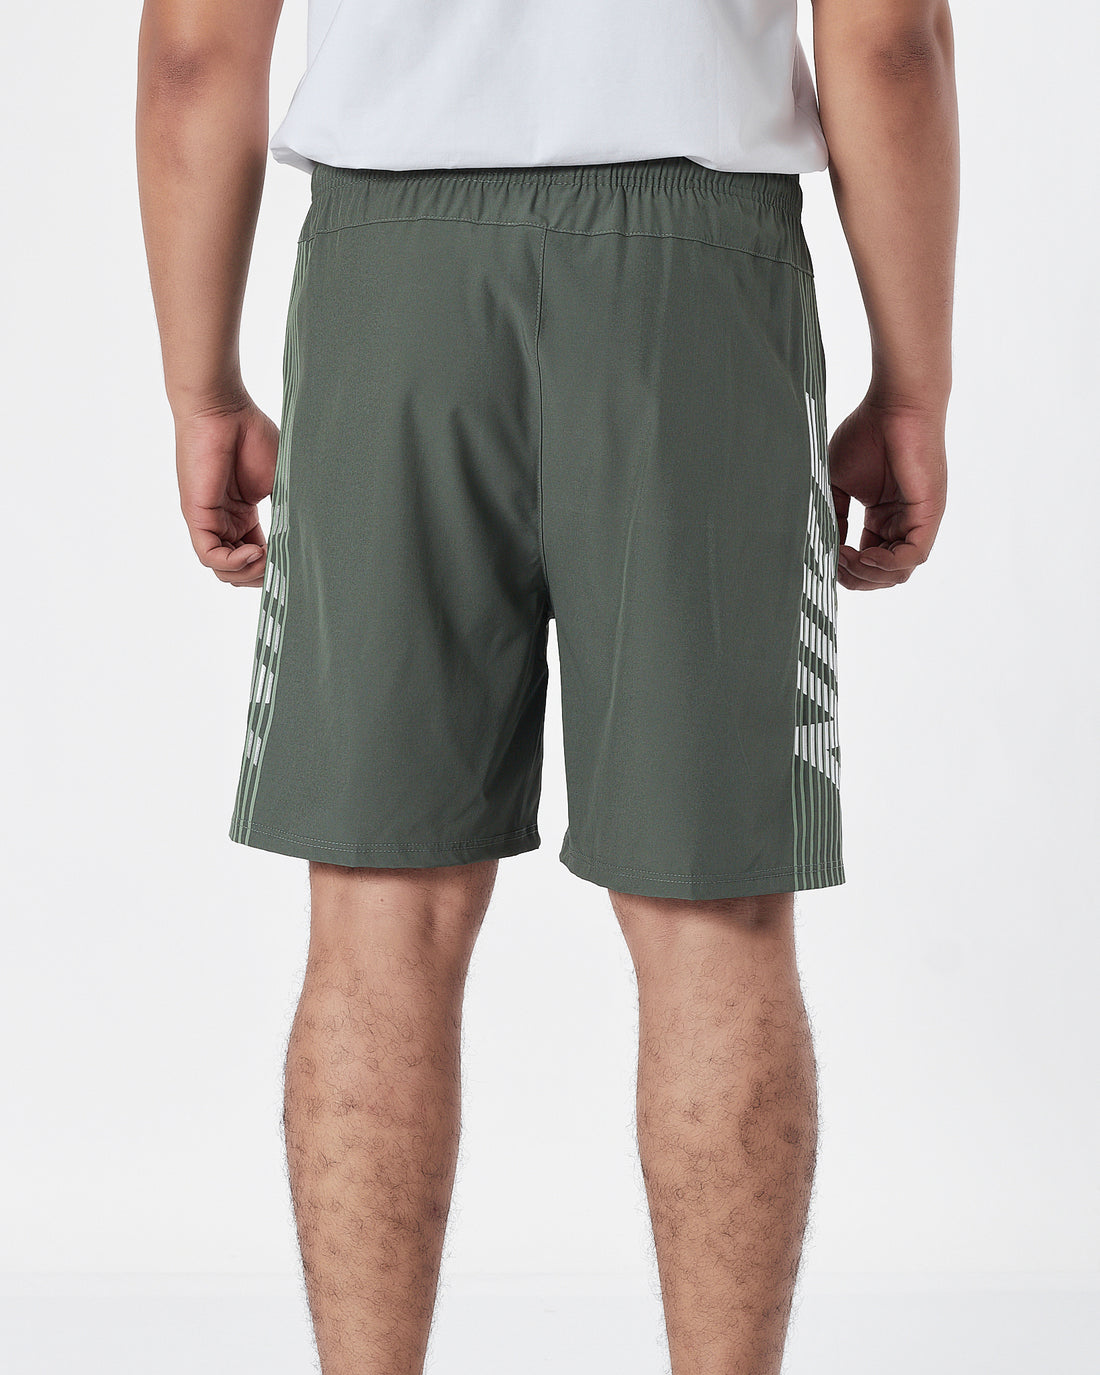 NIK Side Striped Logo Vertical Men Green Track Shorts 12.90